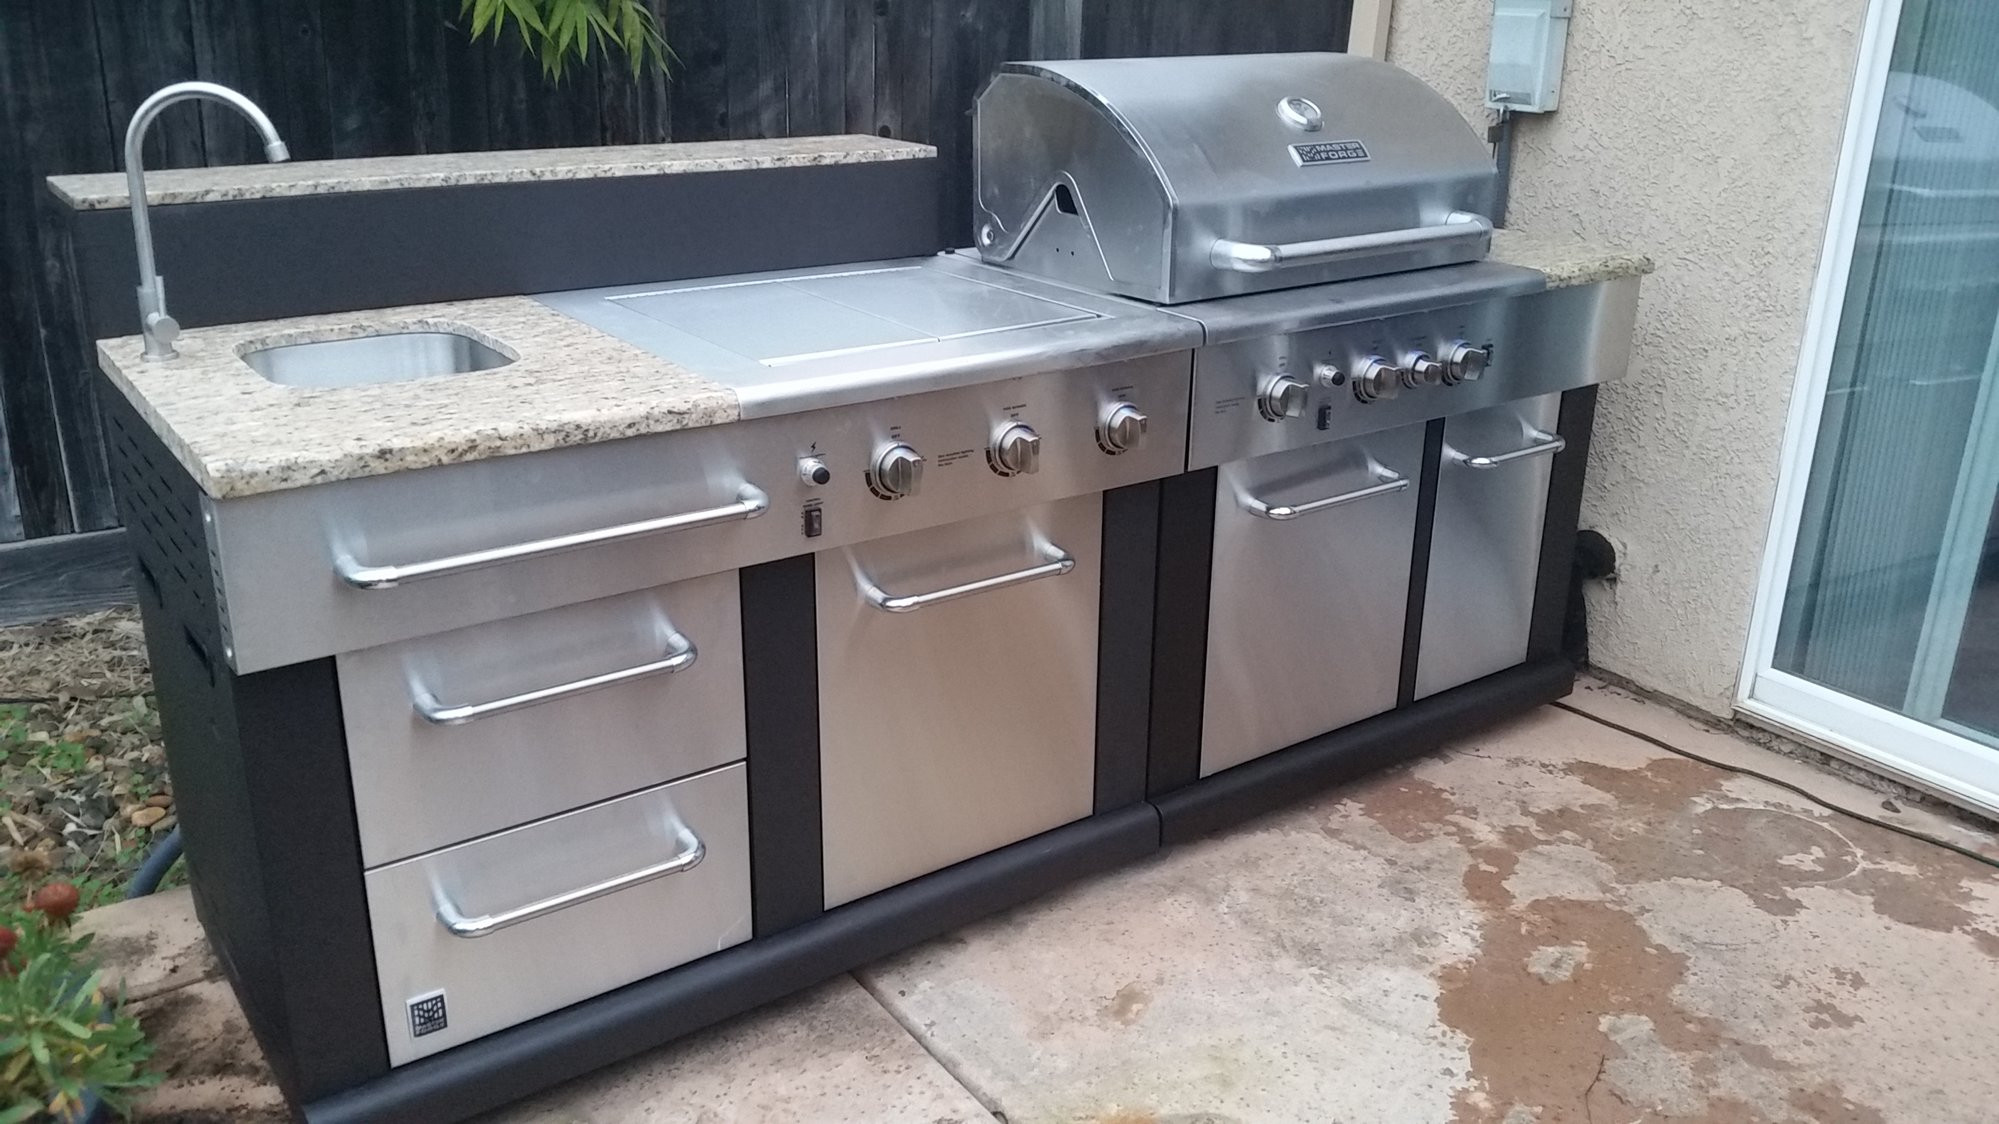 Master Forge Modular Outdoor Kitchen
 Master Forge Modular Outdoor Kitchen Reviews